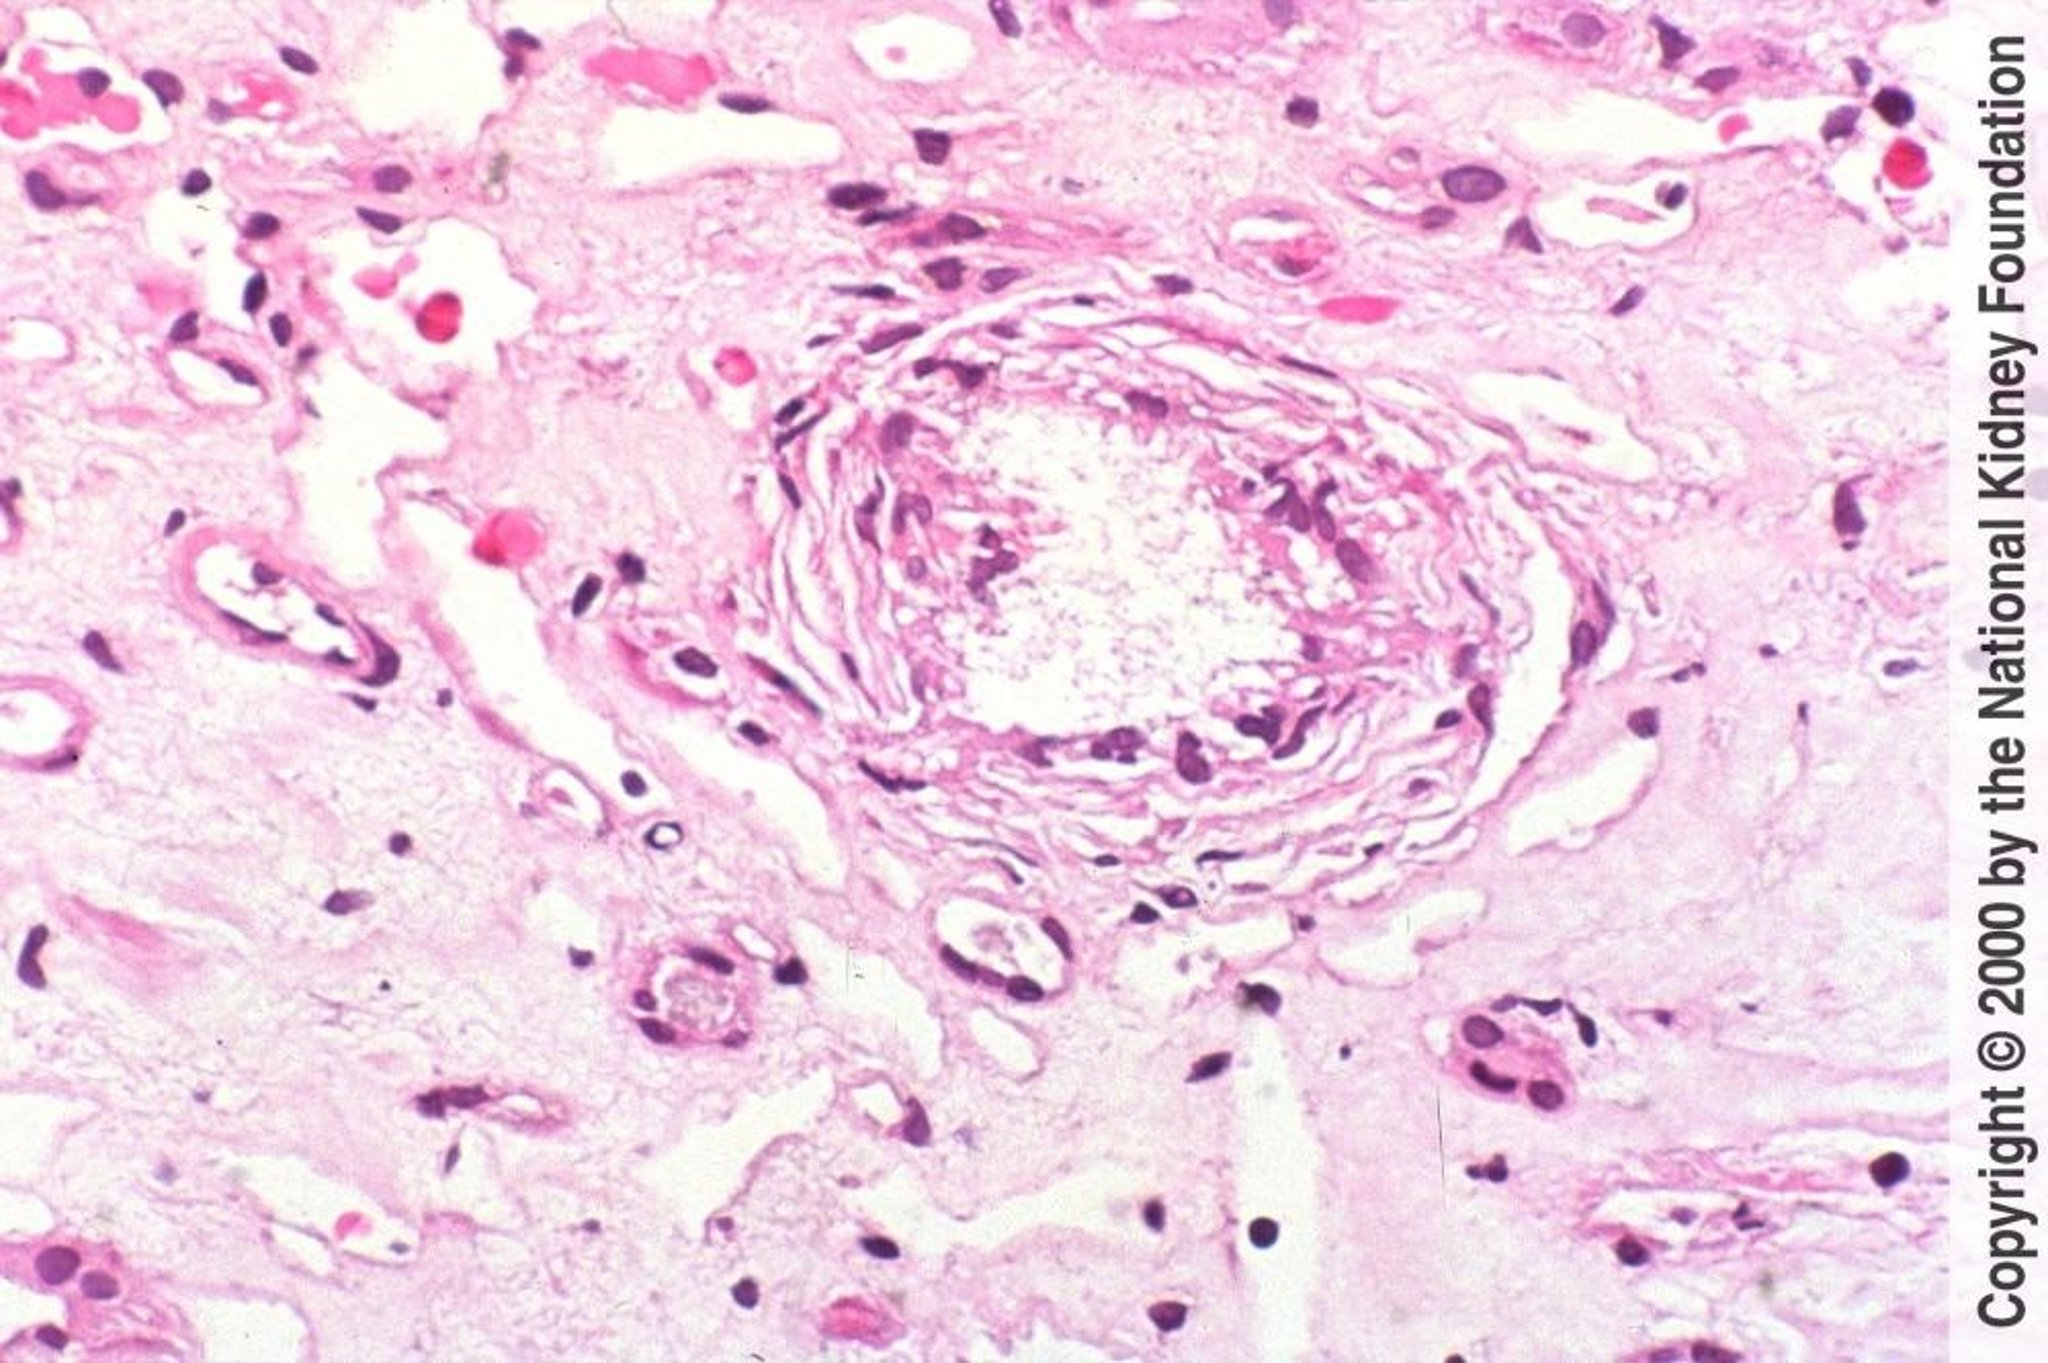 Chronic Urate Nephropathy